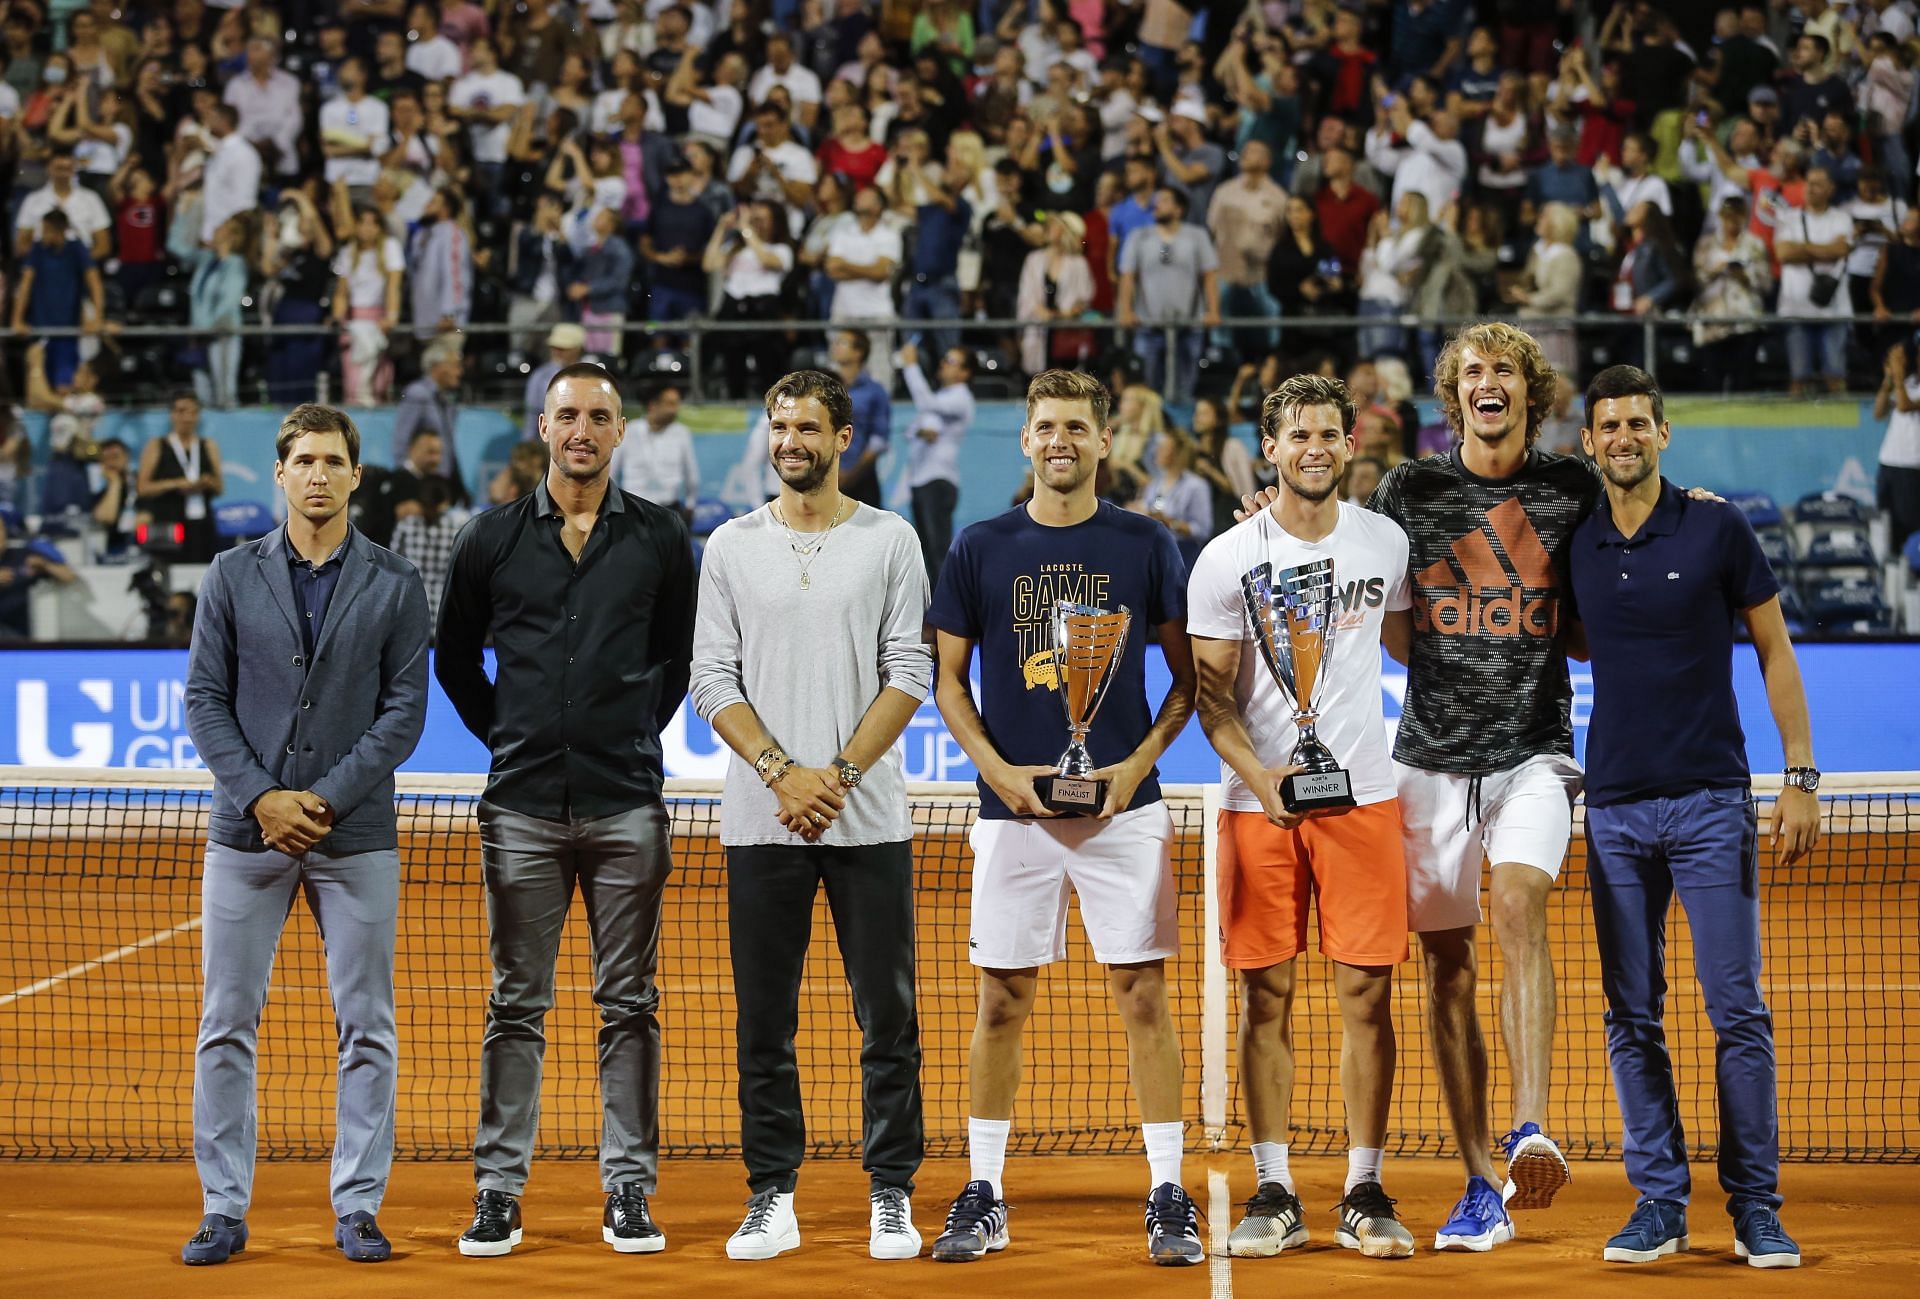 The Adria Tour, organized by Novak Djokovic, came under heavy scrutiny